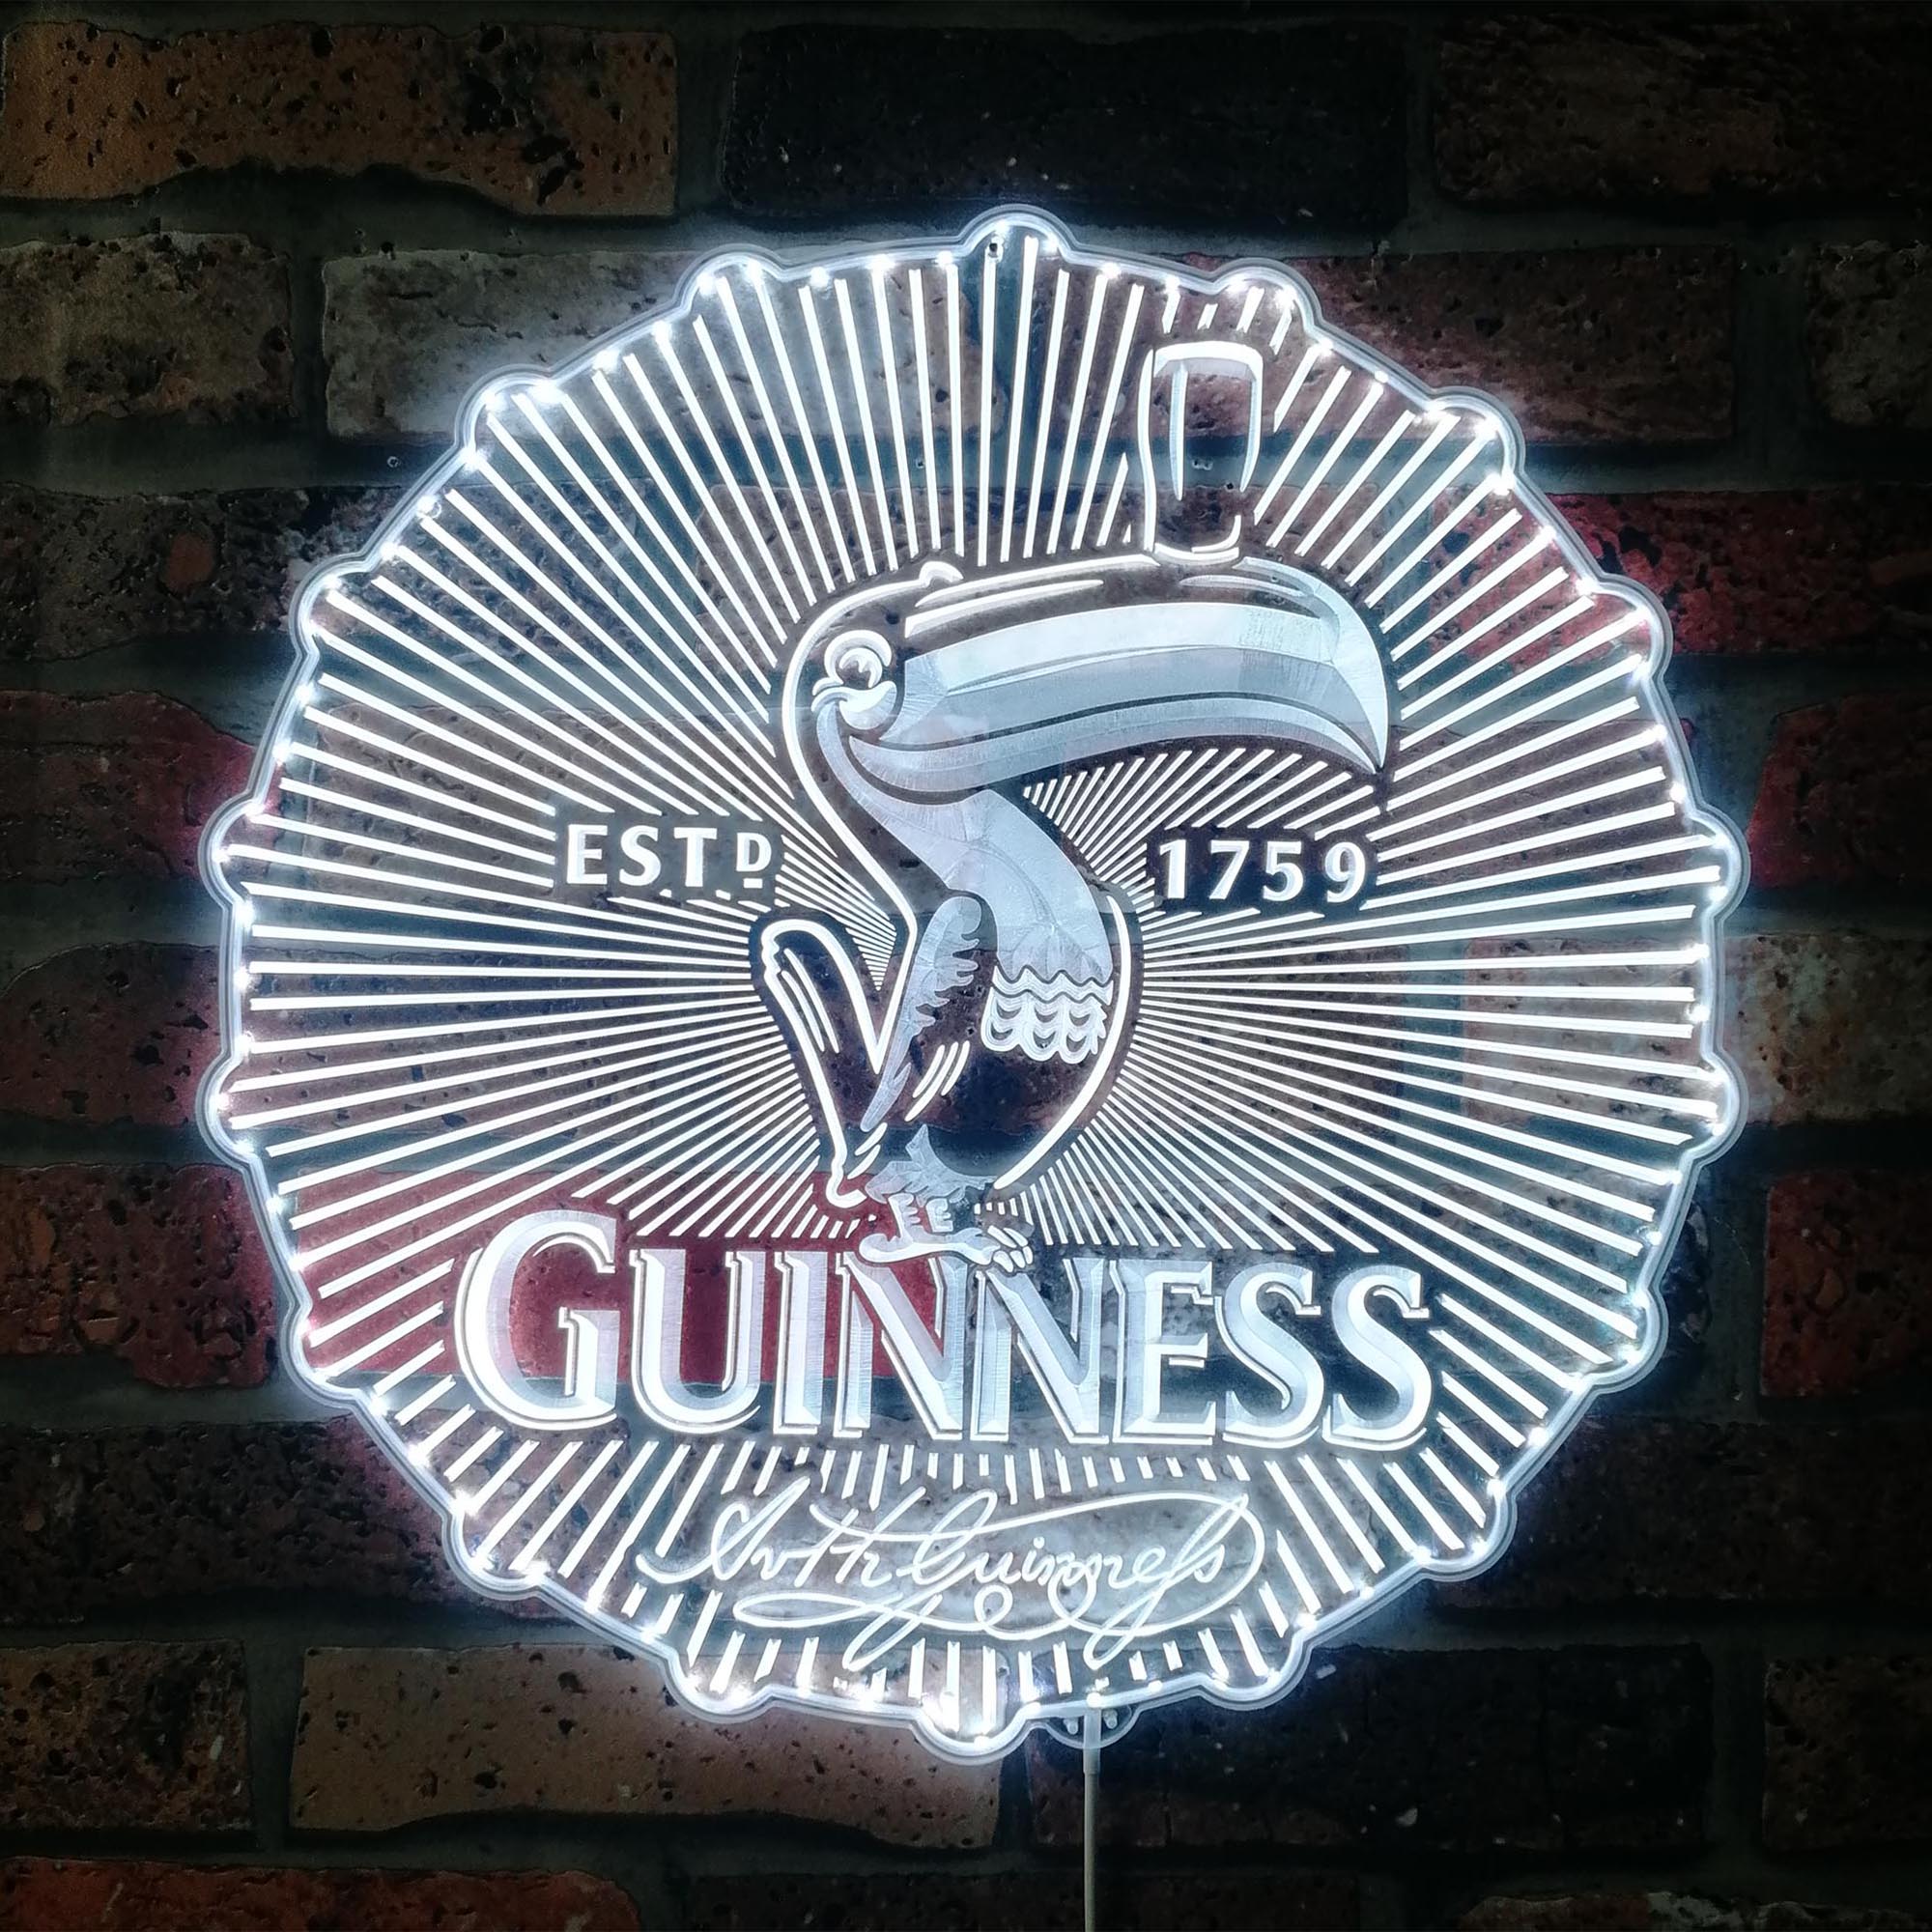 Guinness 1759 Dynamic RGB Edge Lit LED Sign